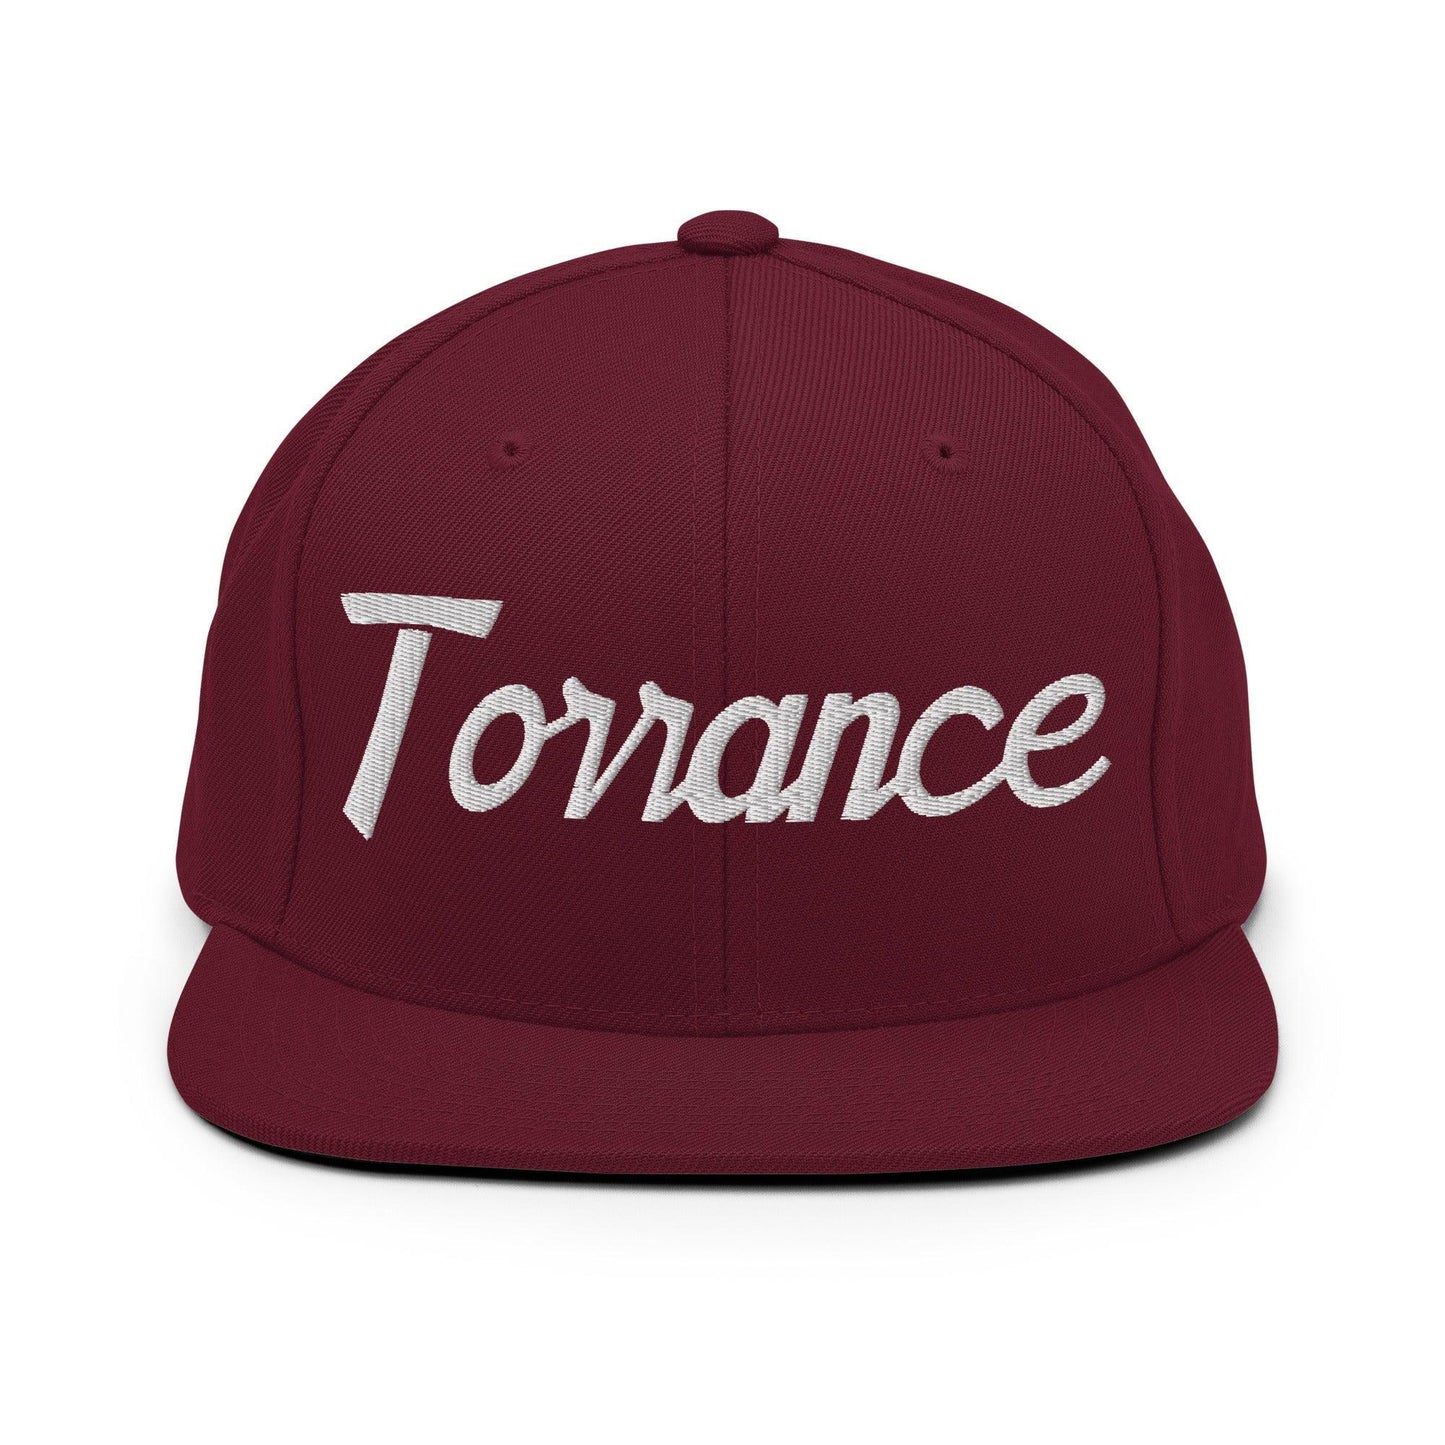 Torrance Script Snapback Hat Maroon